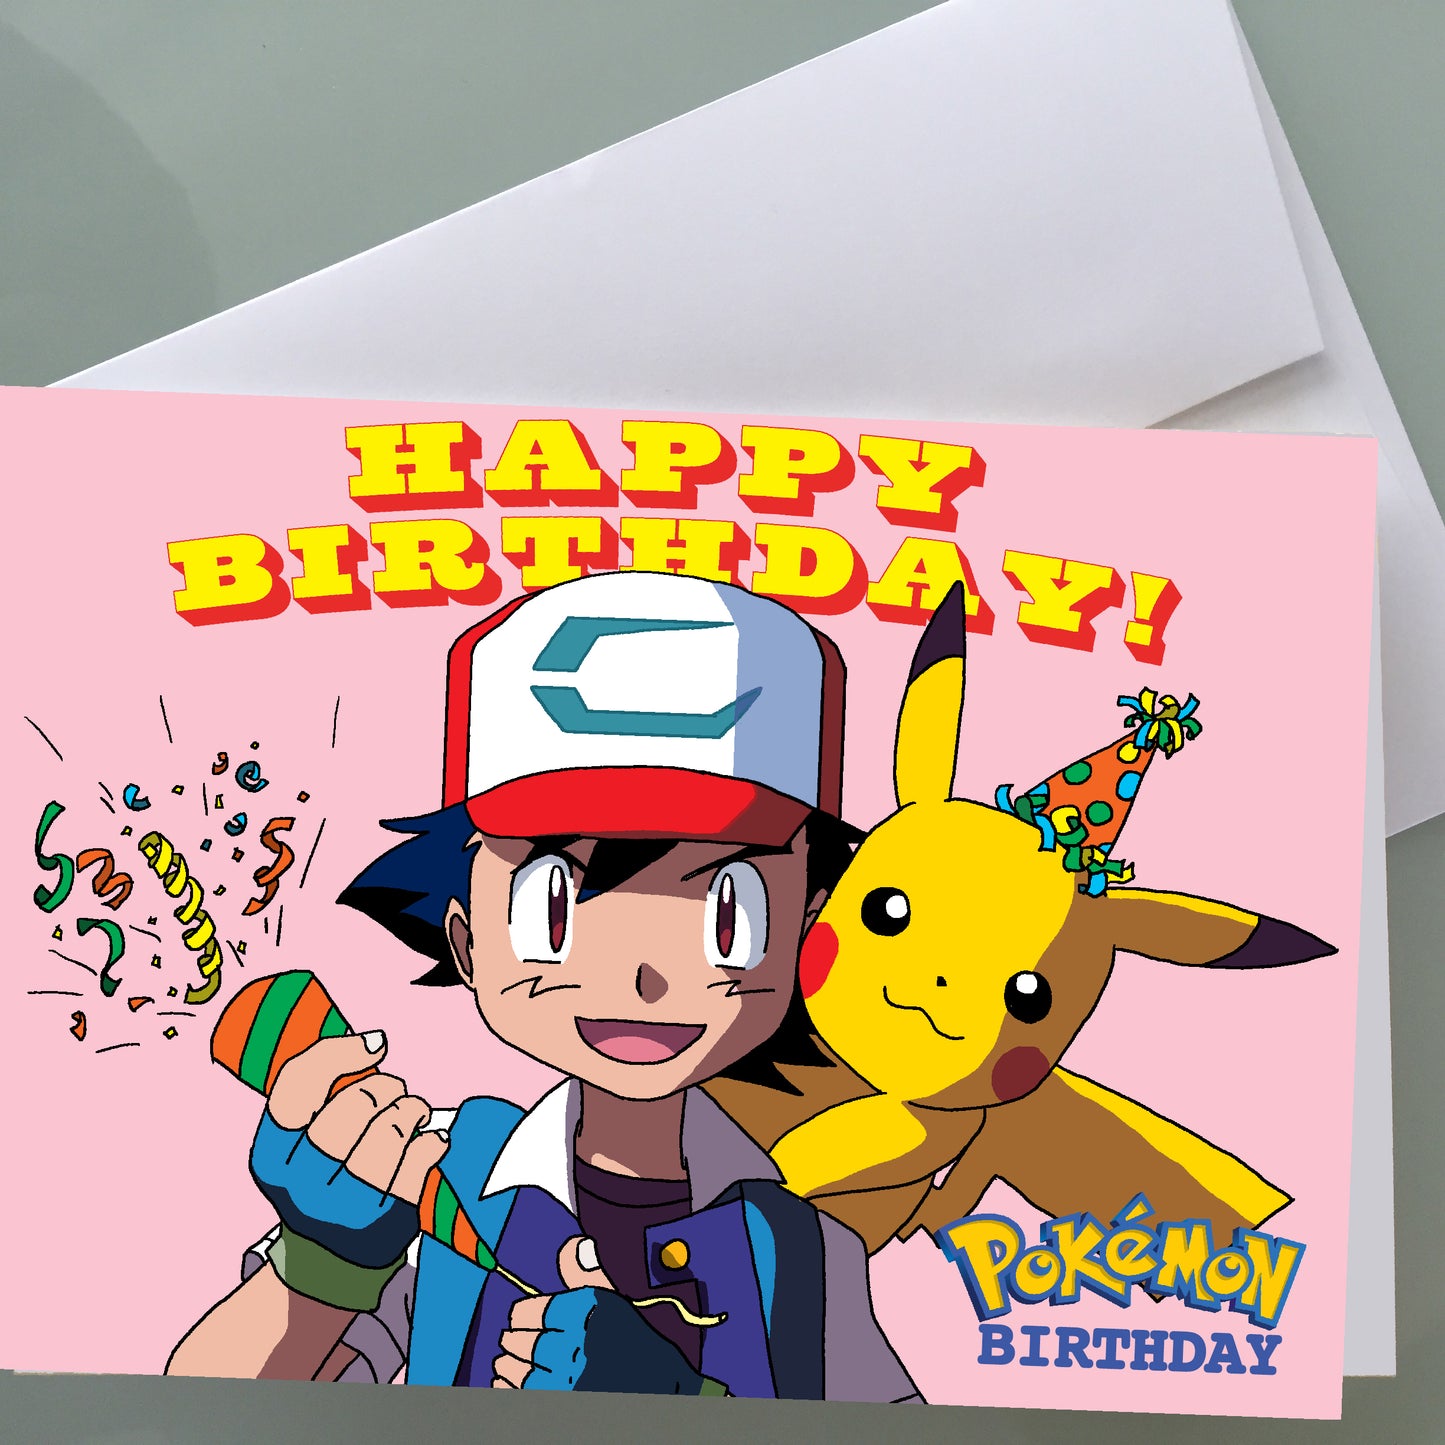 Pokemon Birthday Card - Ash & Pikachu